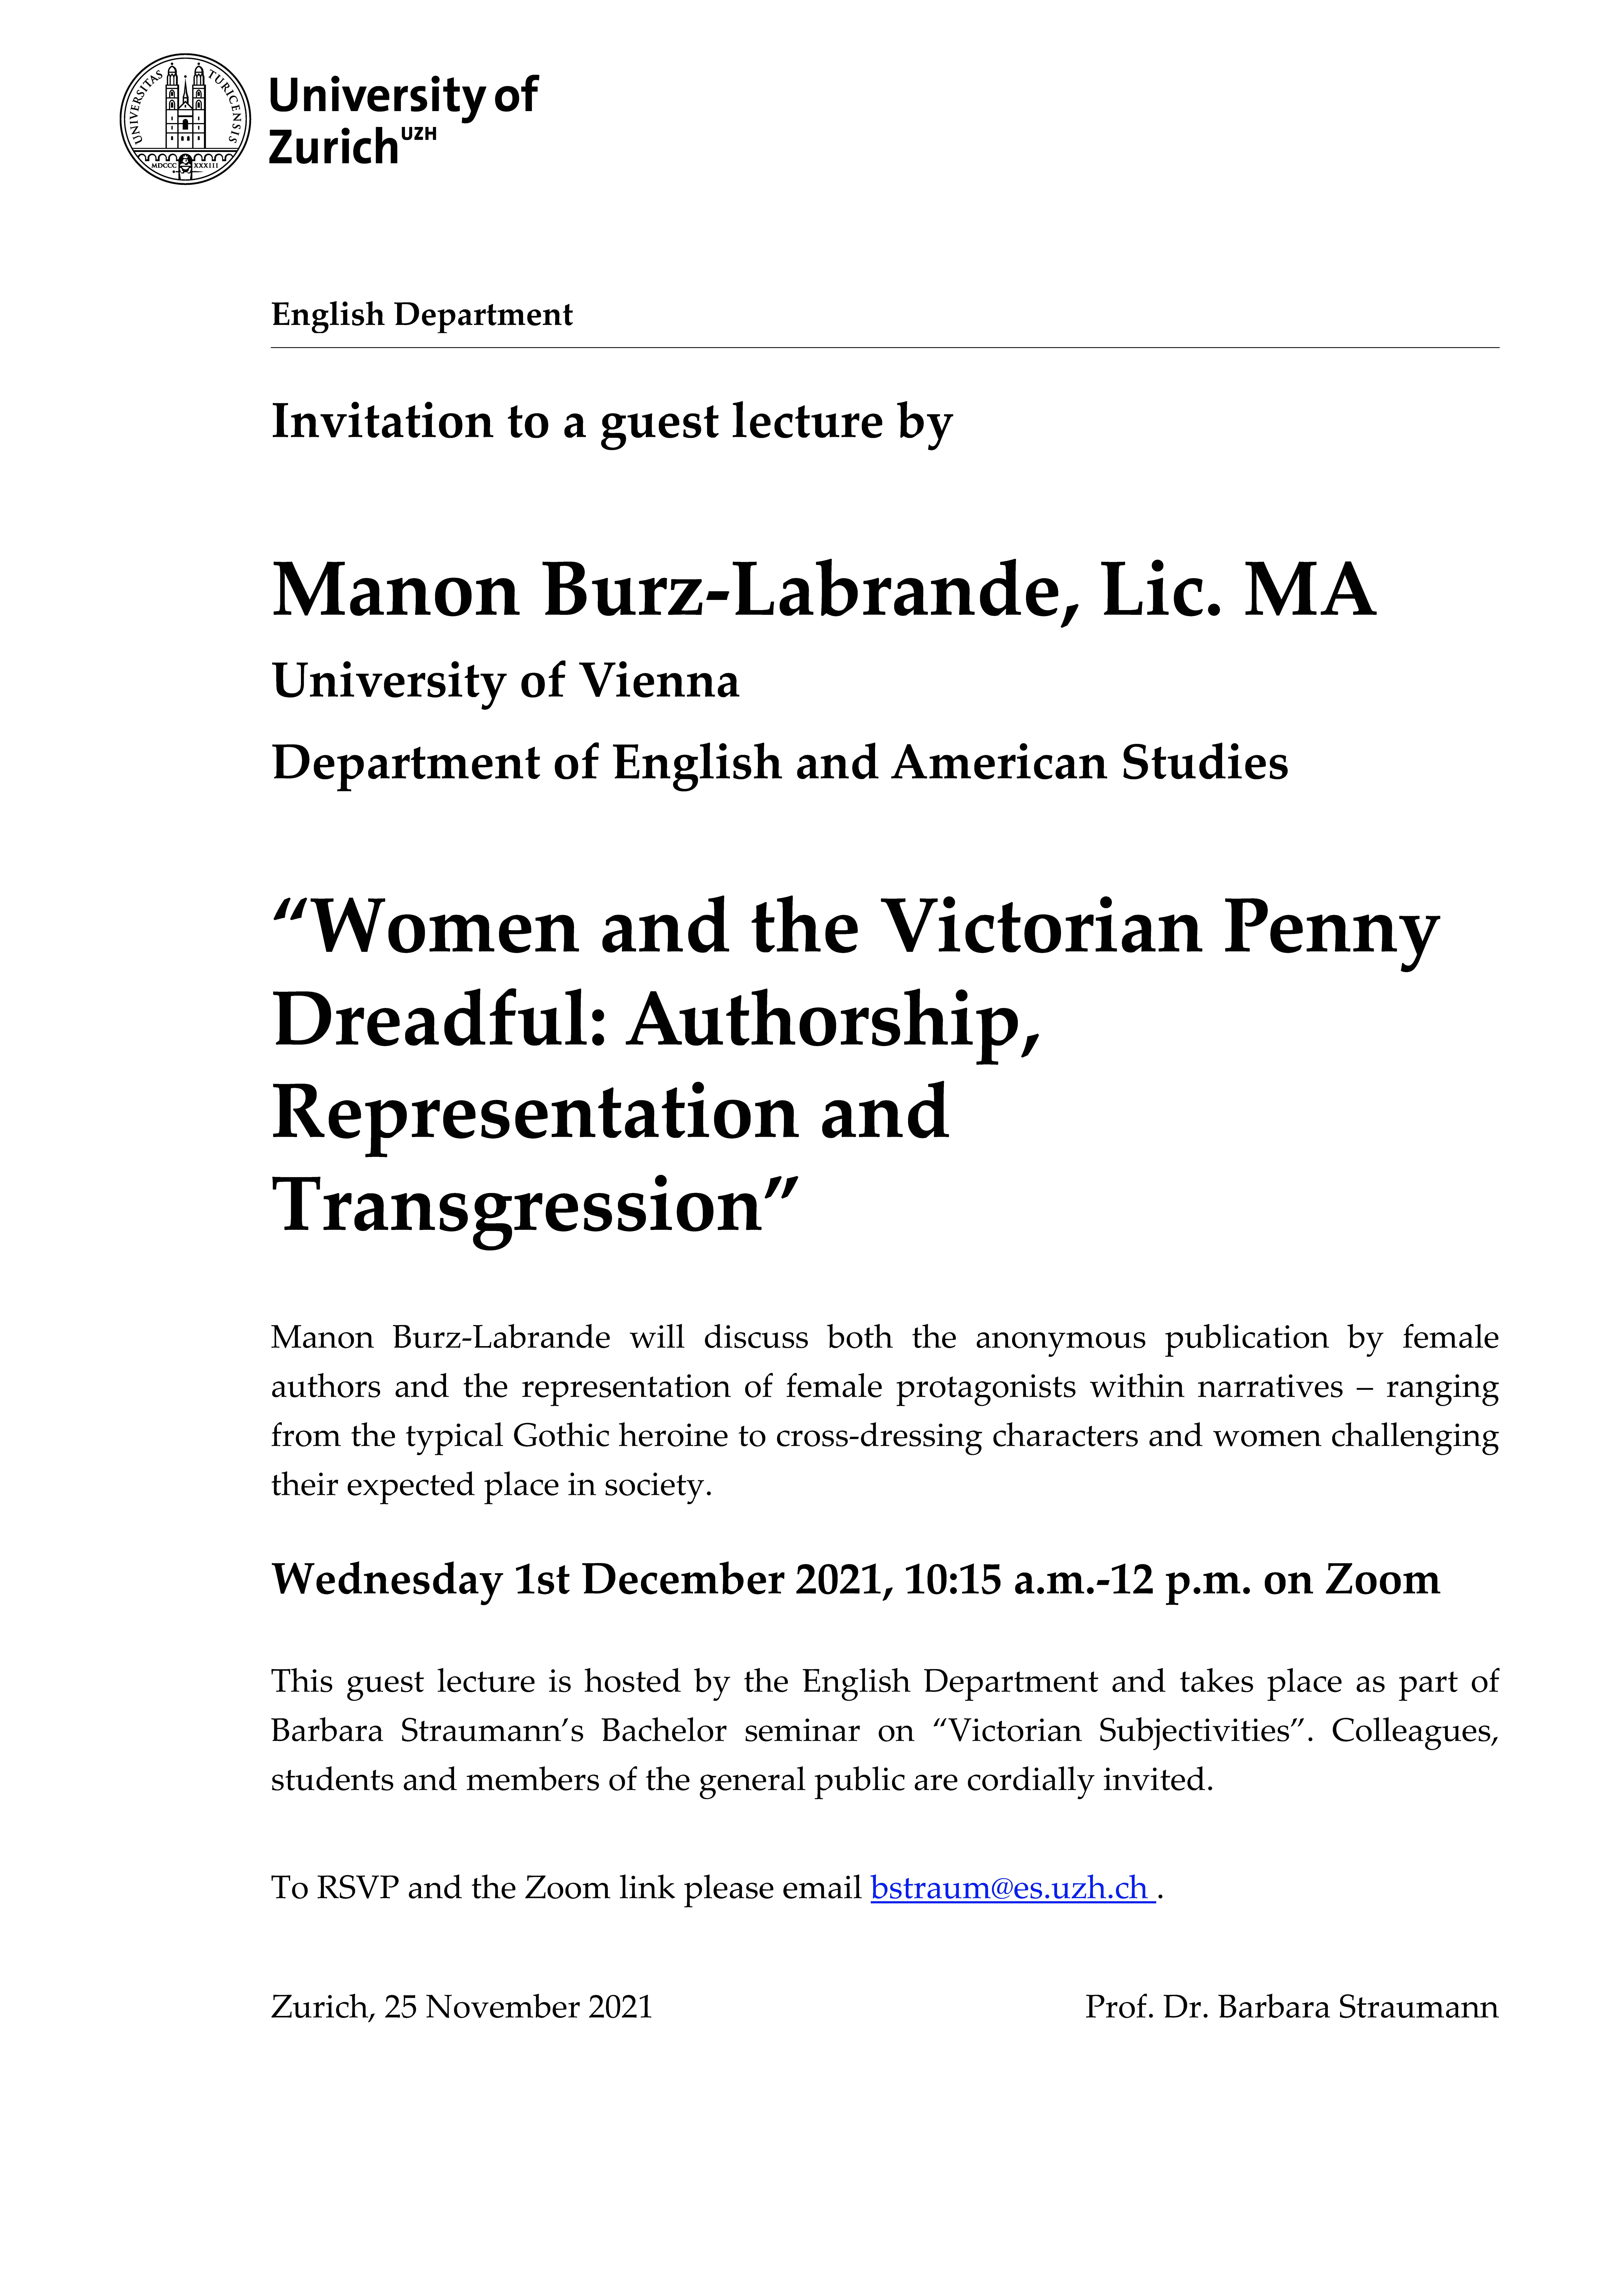 Guest lecture by Manon Burz-Labrande